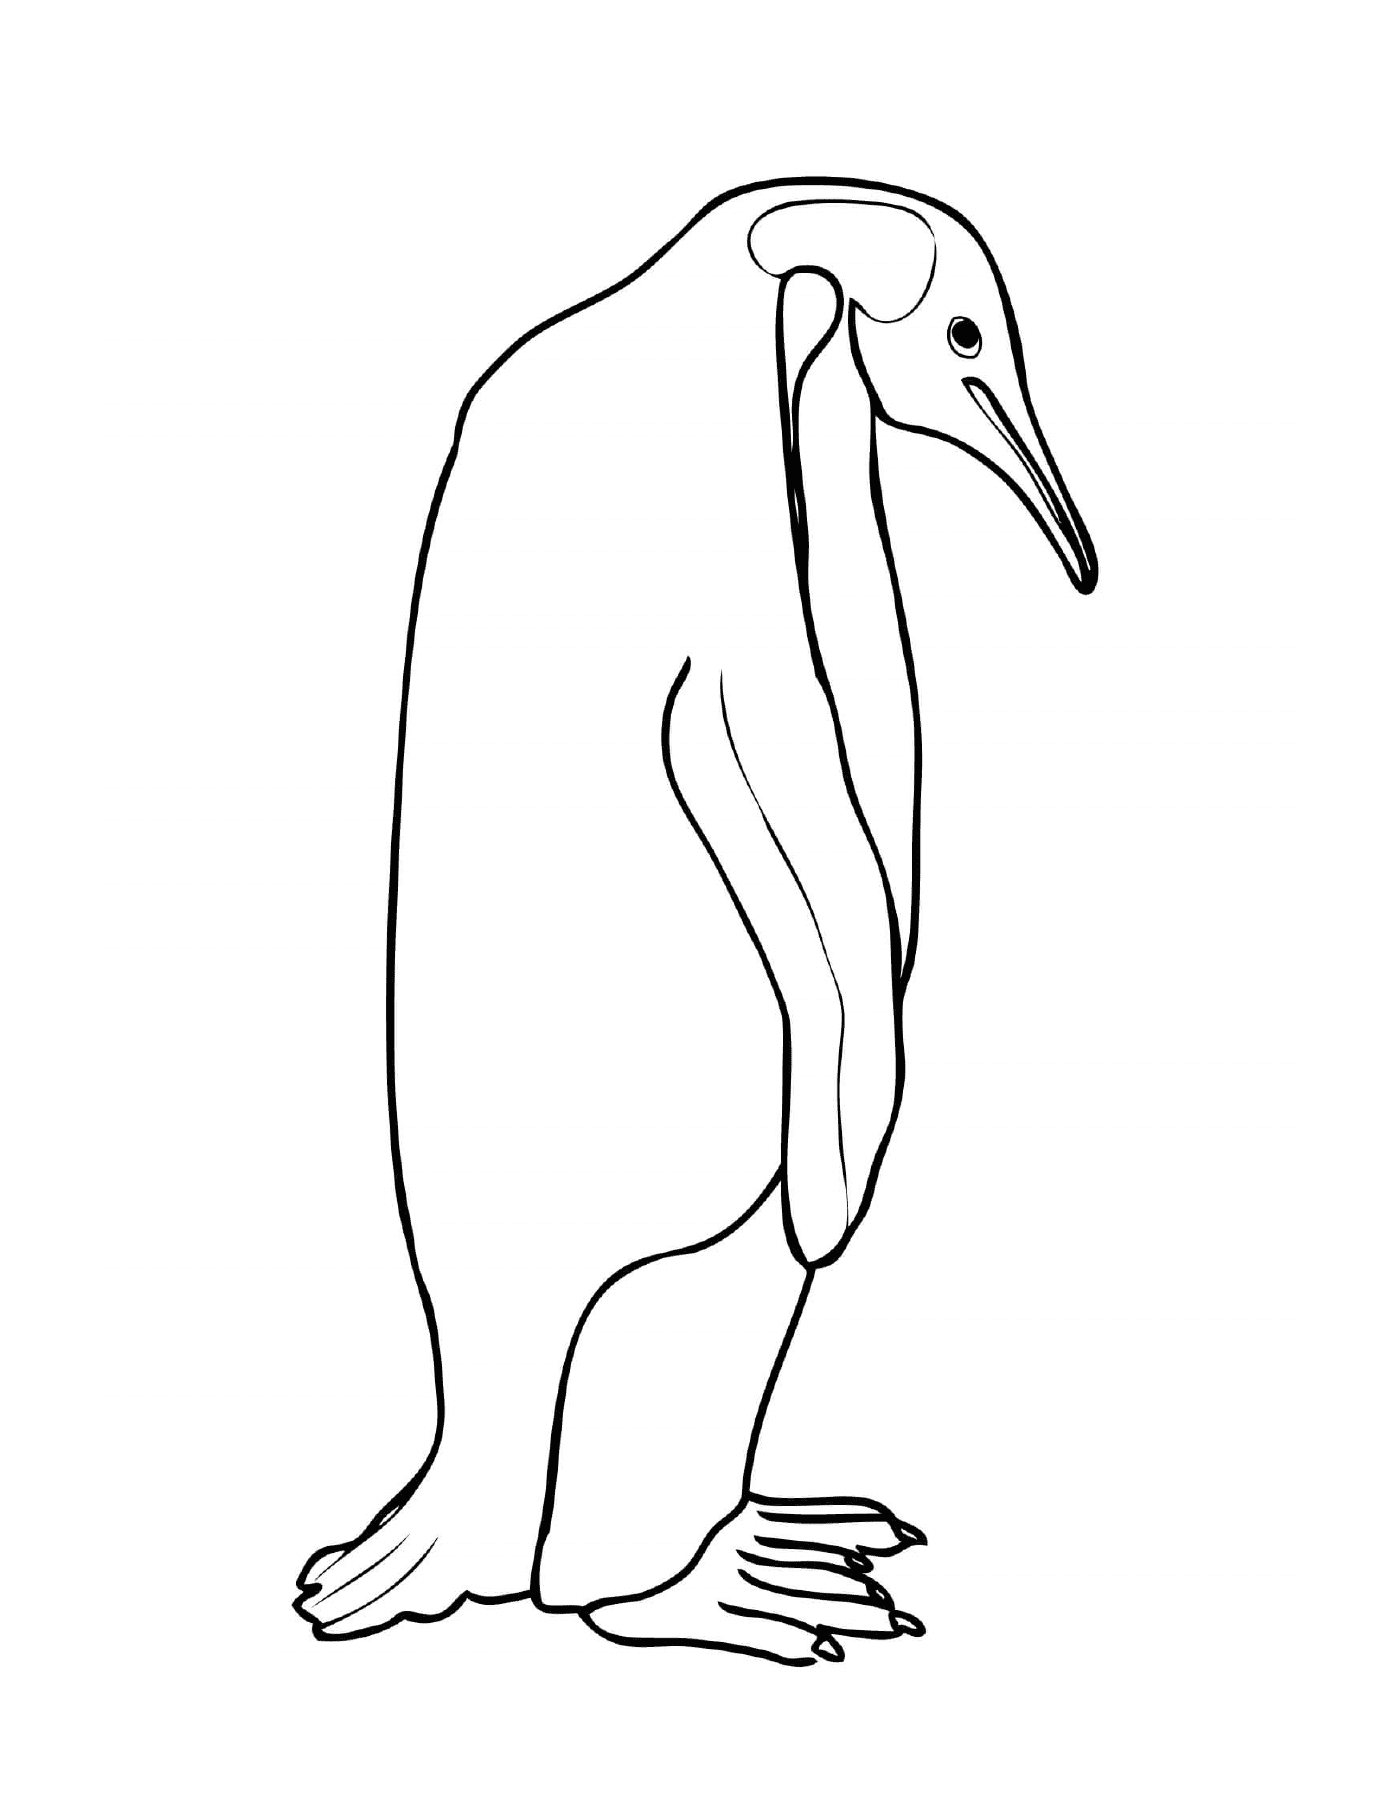  Mancho de pingüino con pico largo 